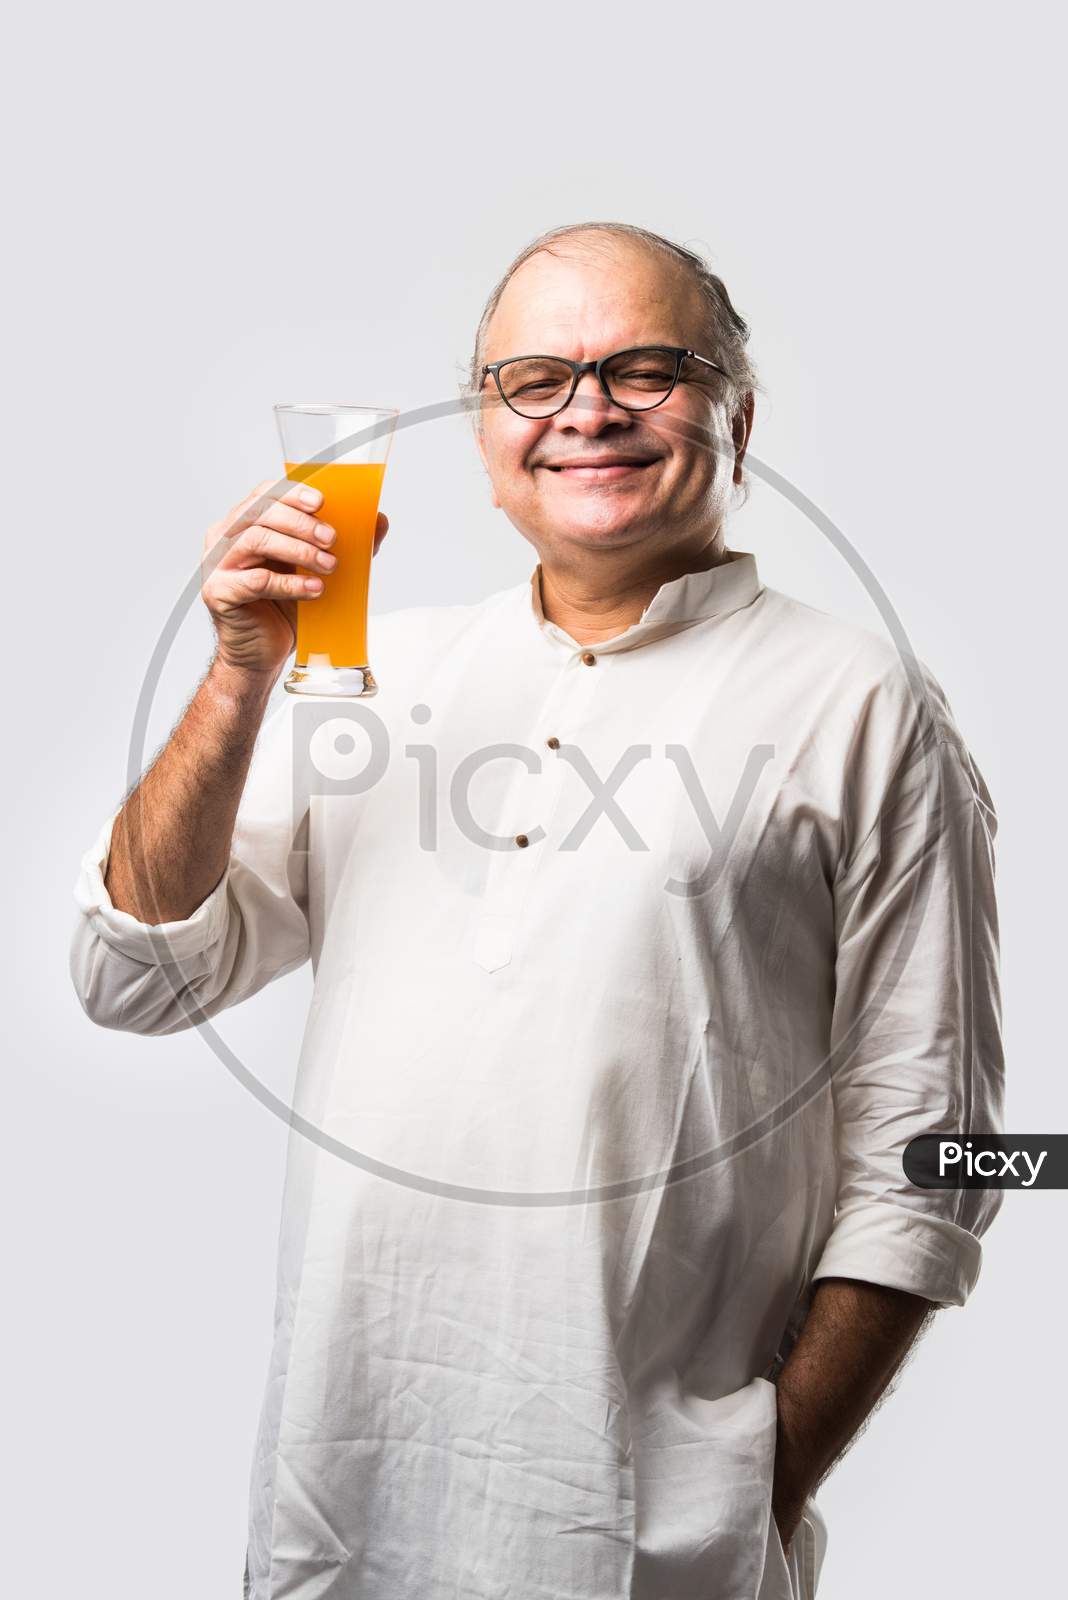 Indian Old Man  Holding Or Drinking Fresh Orange Or Mango Juice In Glass